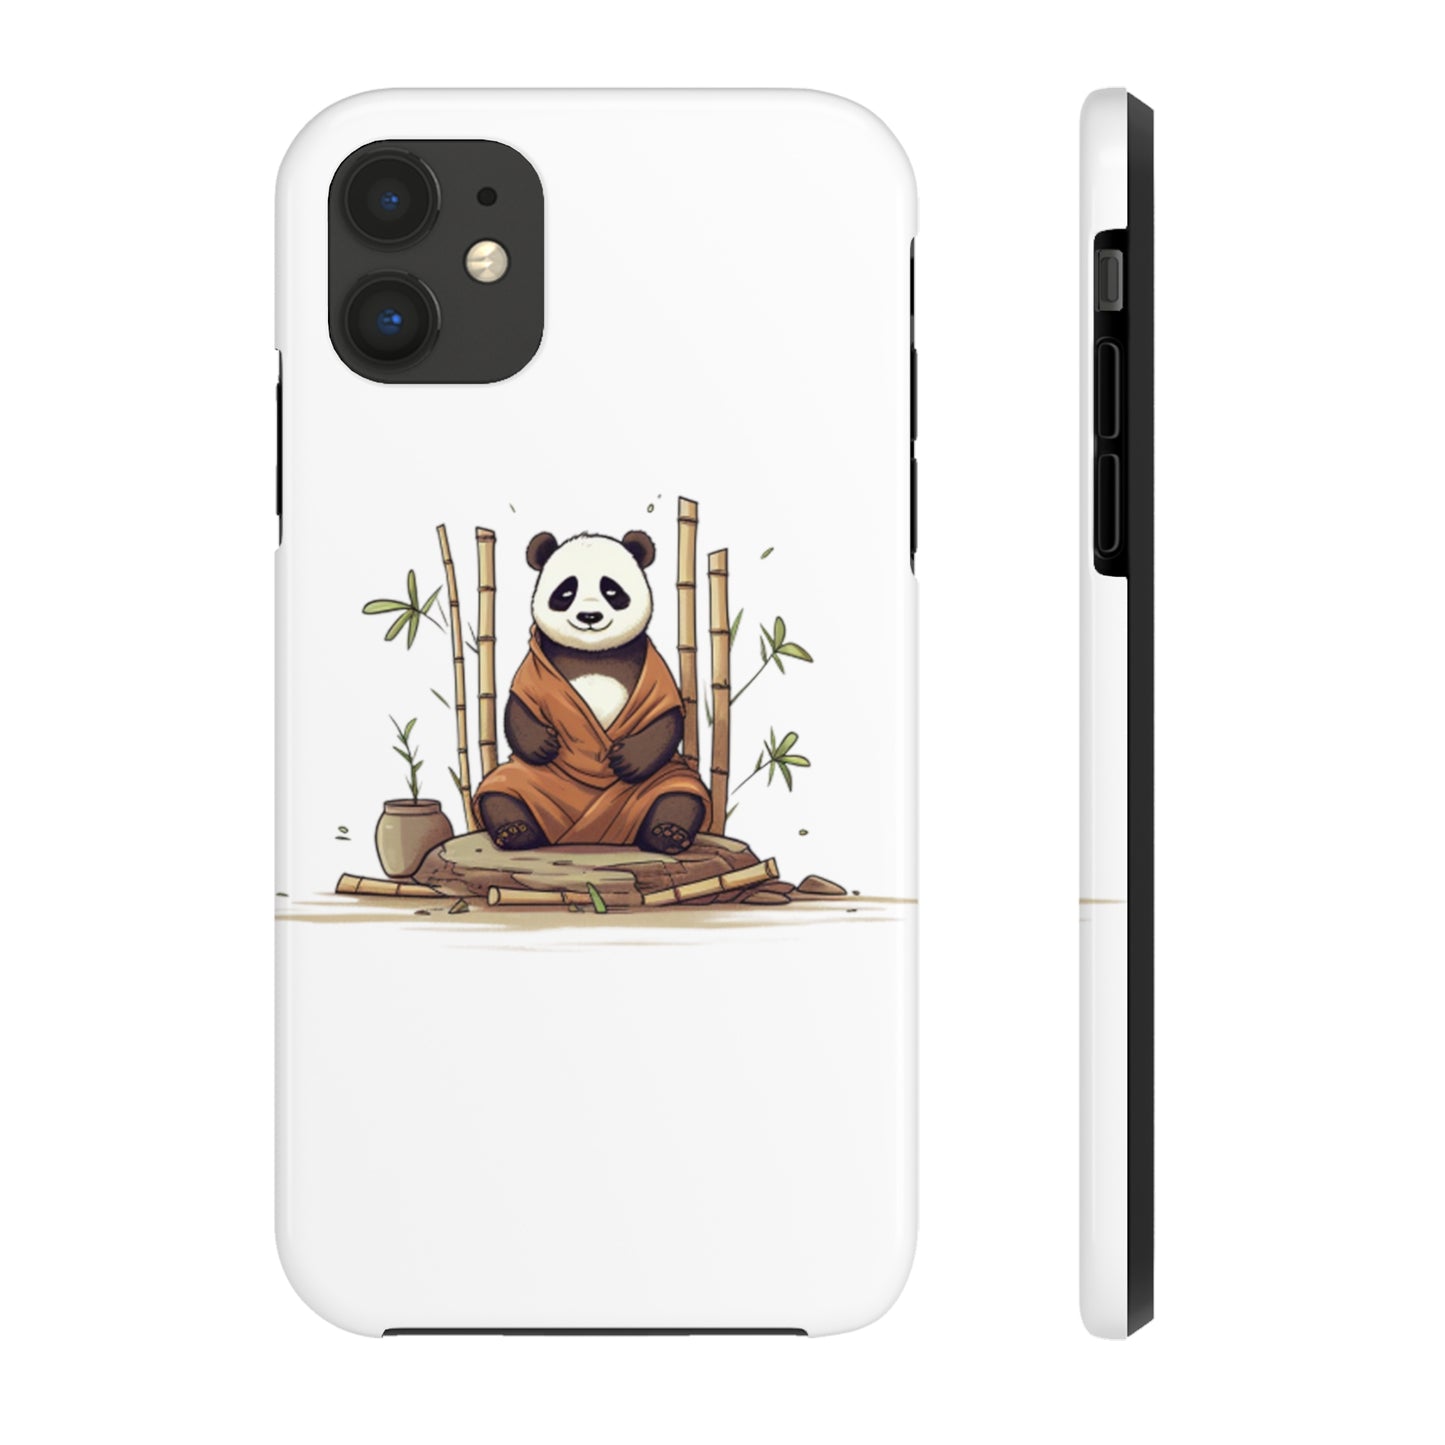 Tough Phone Cases: A Zen Comic Panda